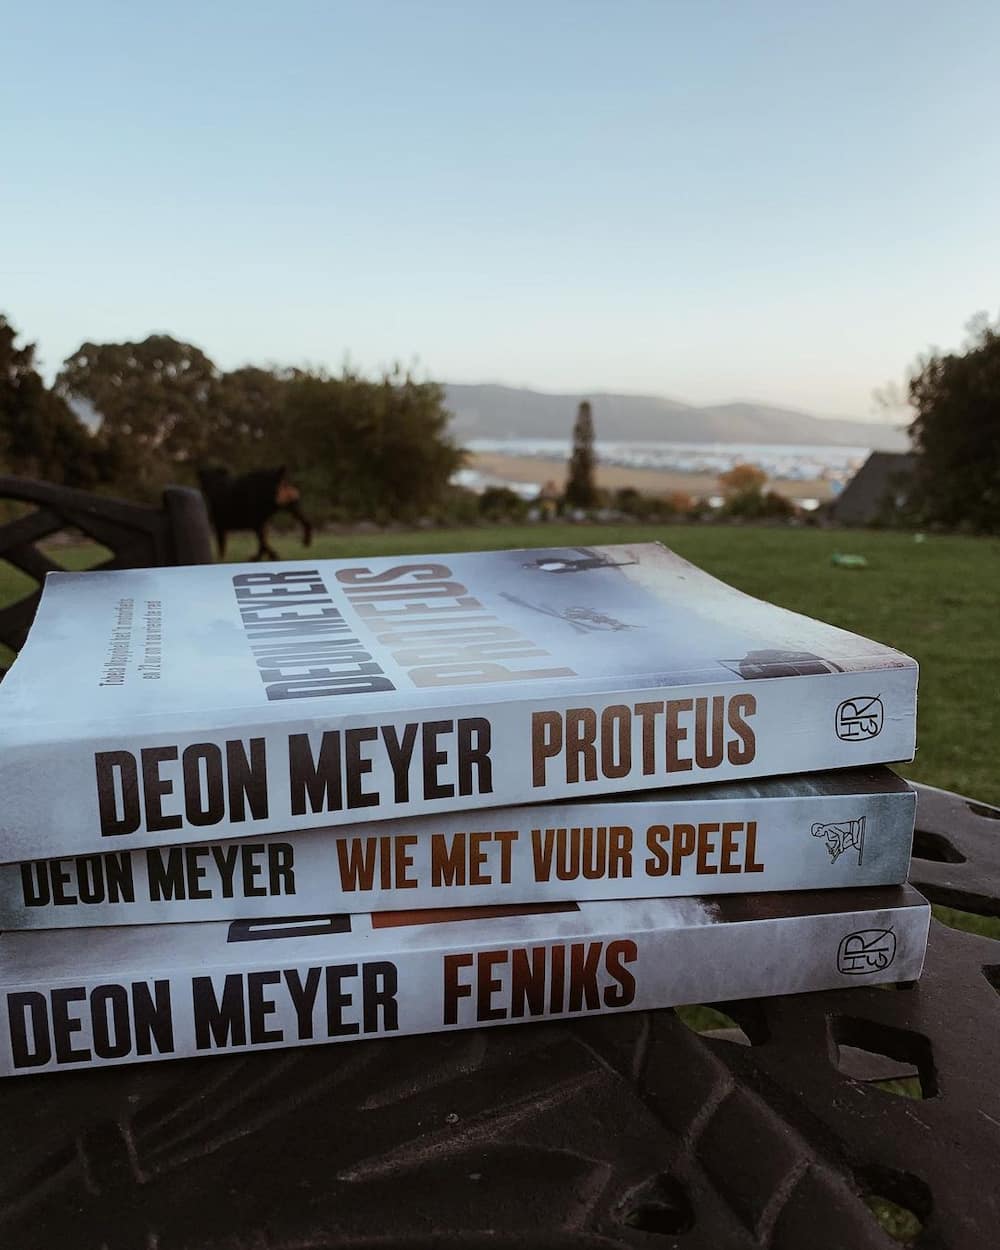 Deon Meyer's latest book